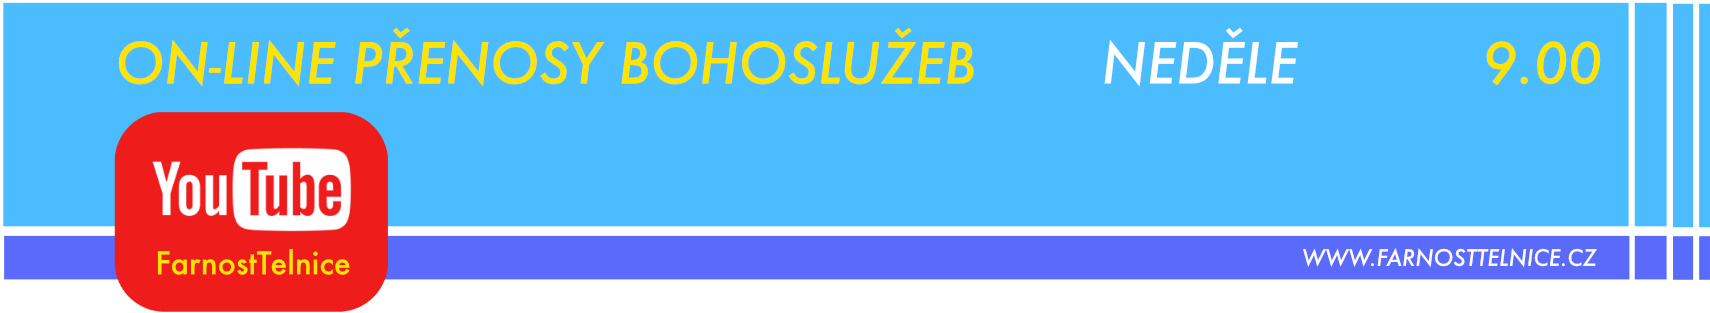 Broadcast-title:porad-bohosluzeb-jen nedele-web.png